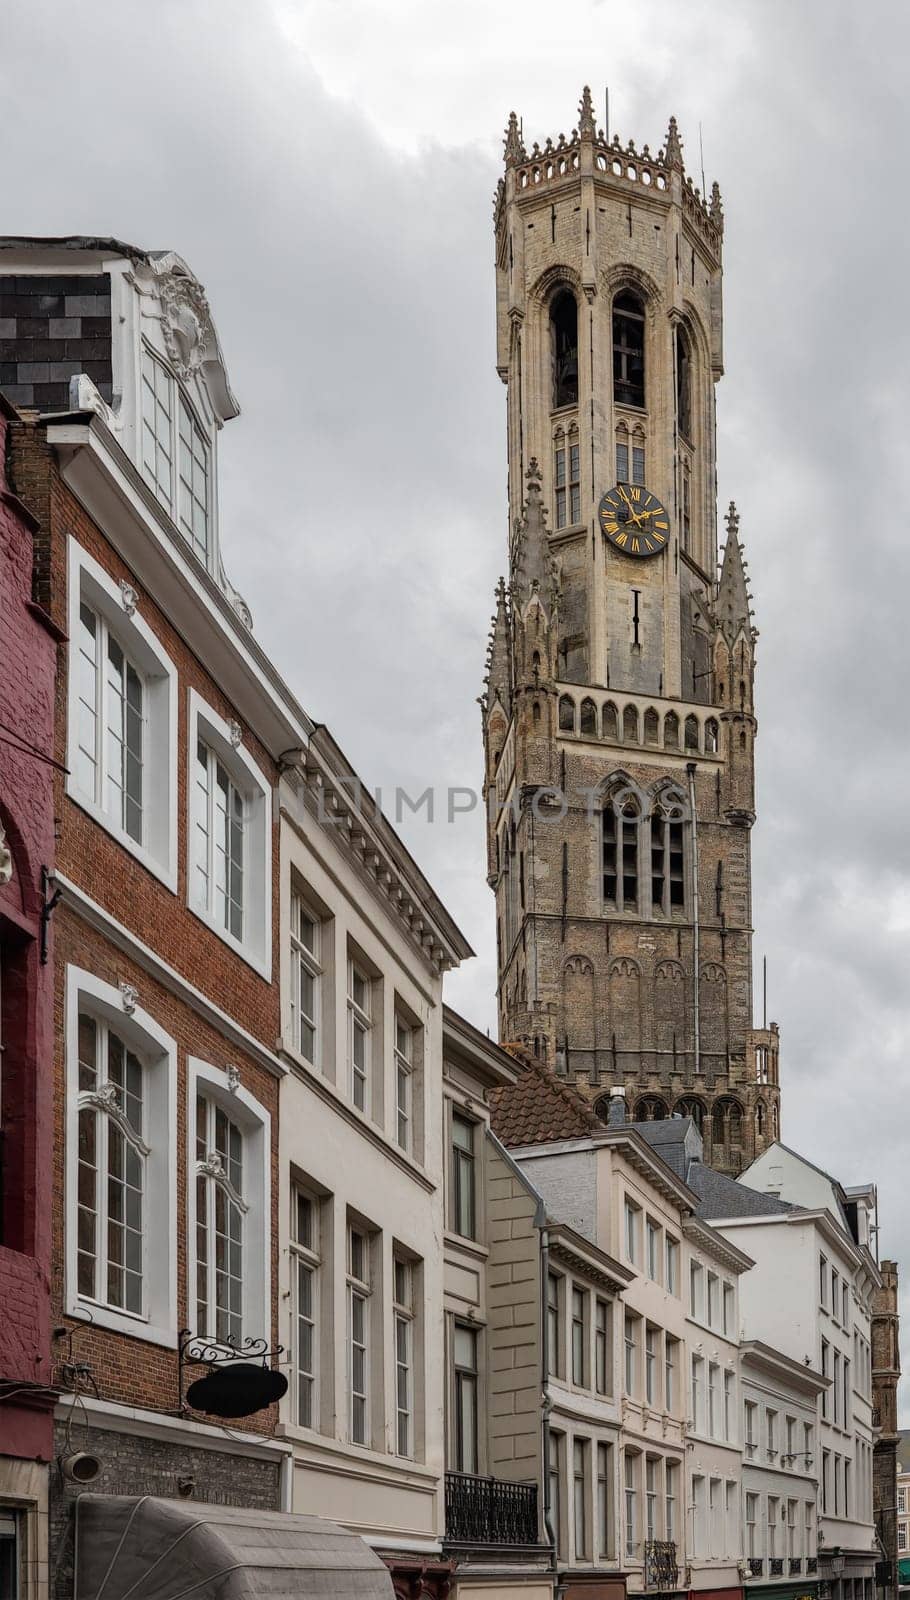 Belfry Tower of Bruges by mot1963